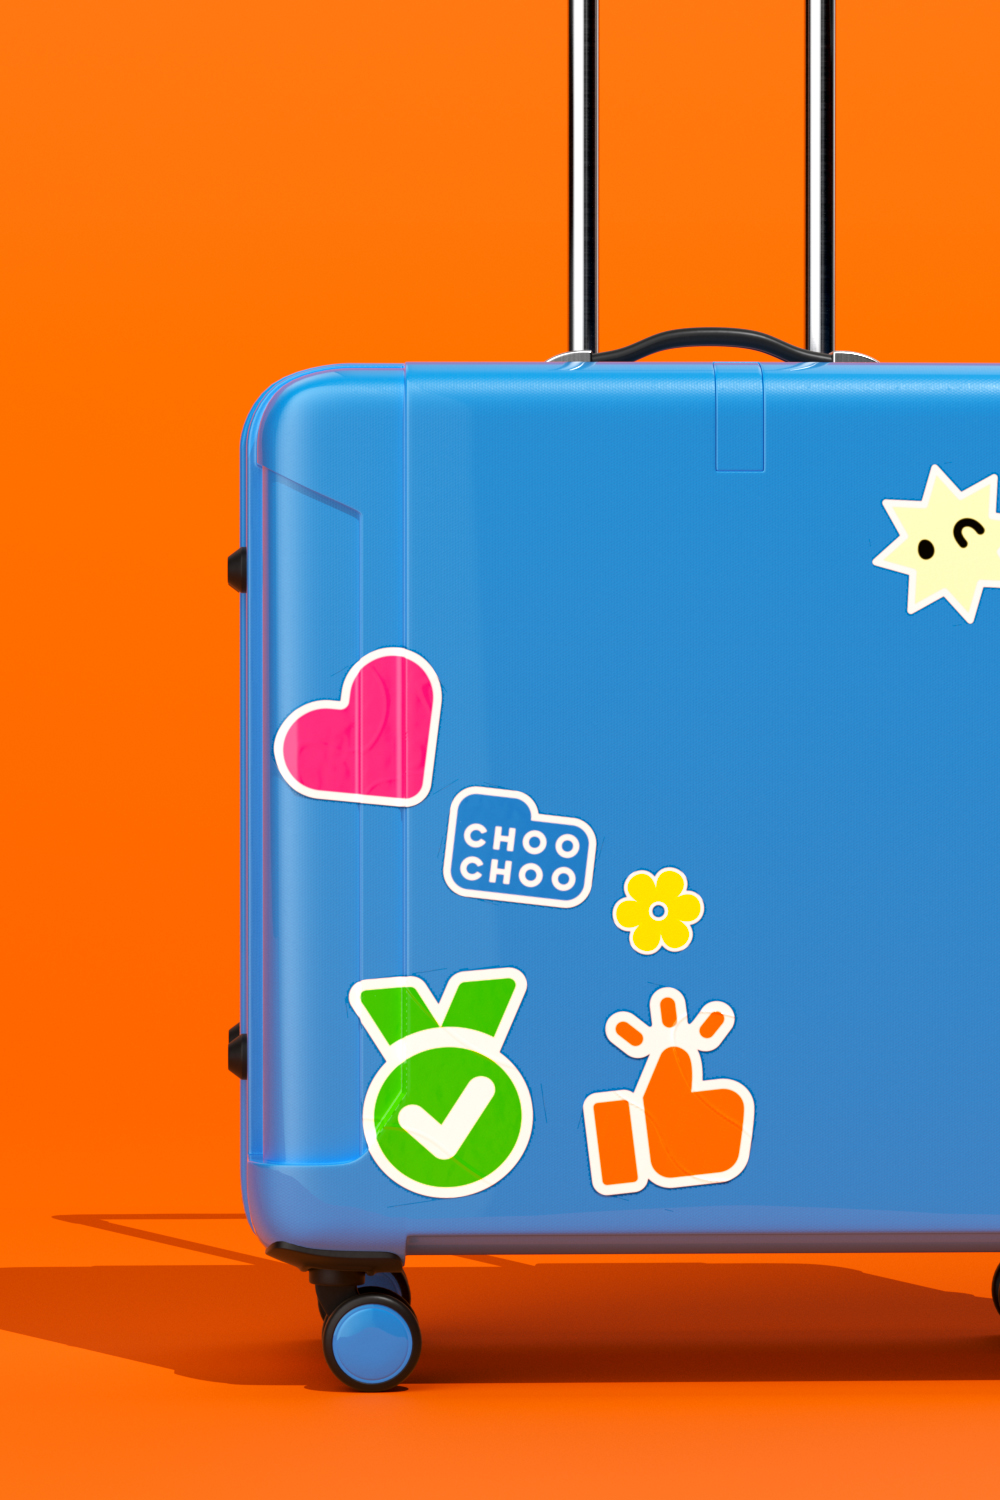 ChooChoo Stickers on Luggage